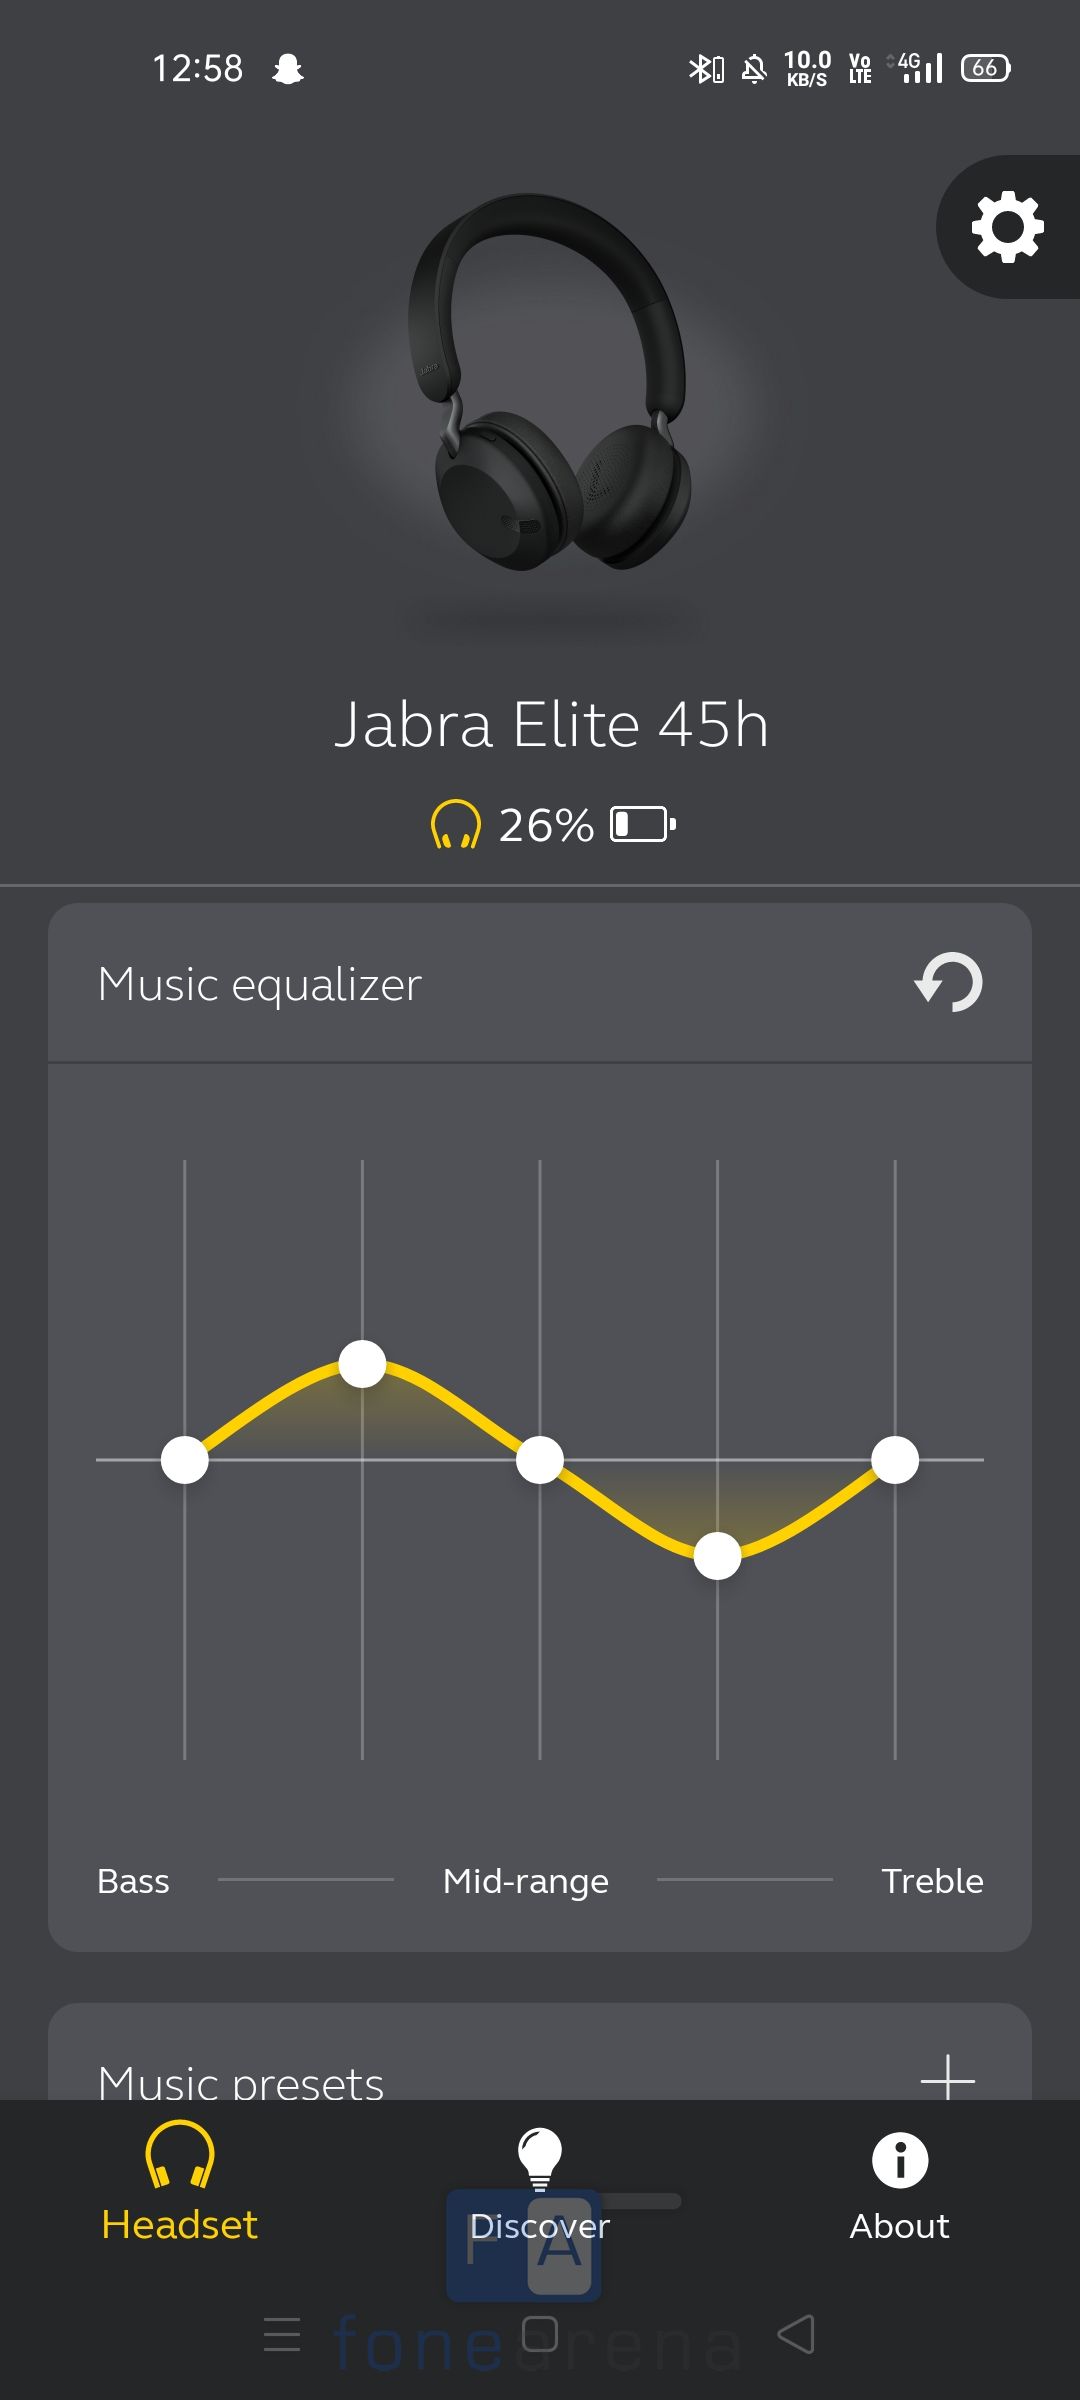 Jabra Elite 45h - Going The Audio Distance - Stuff South Africa